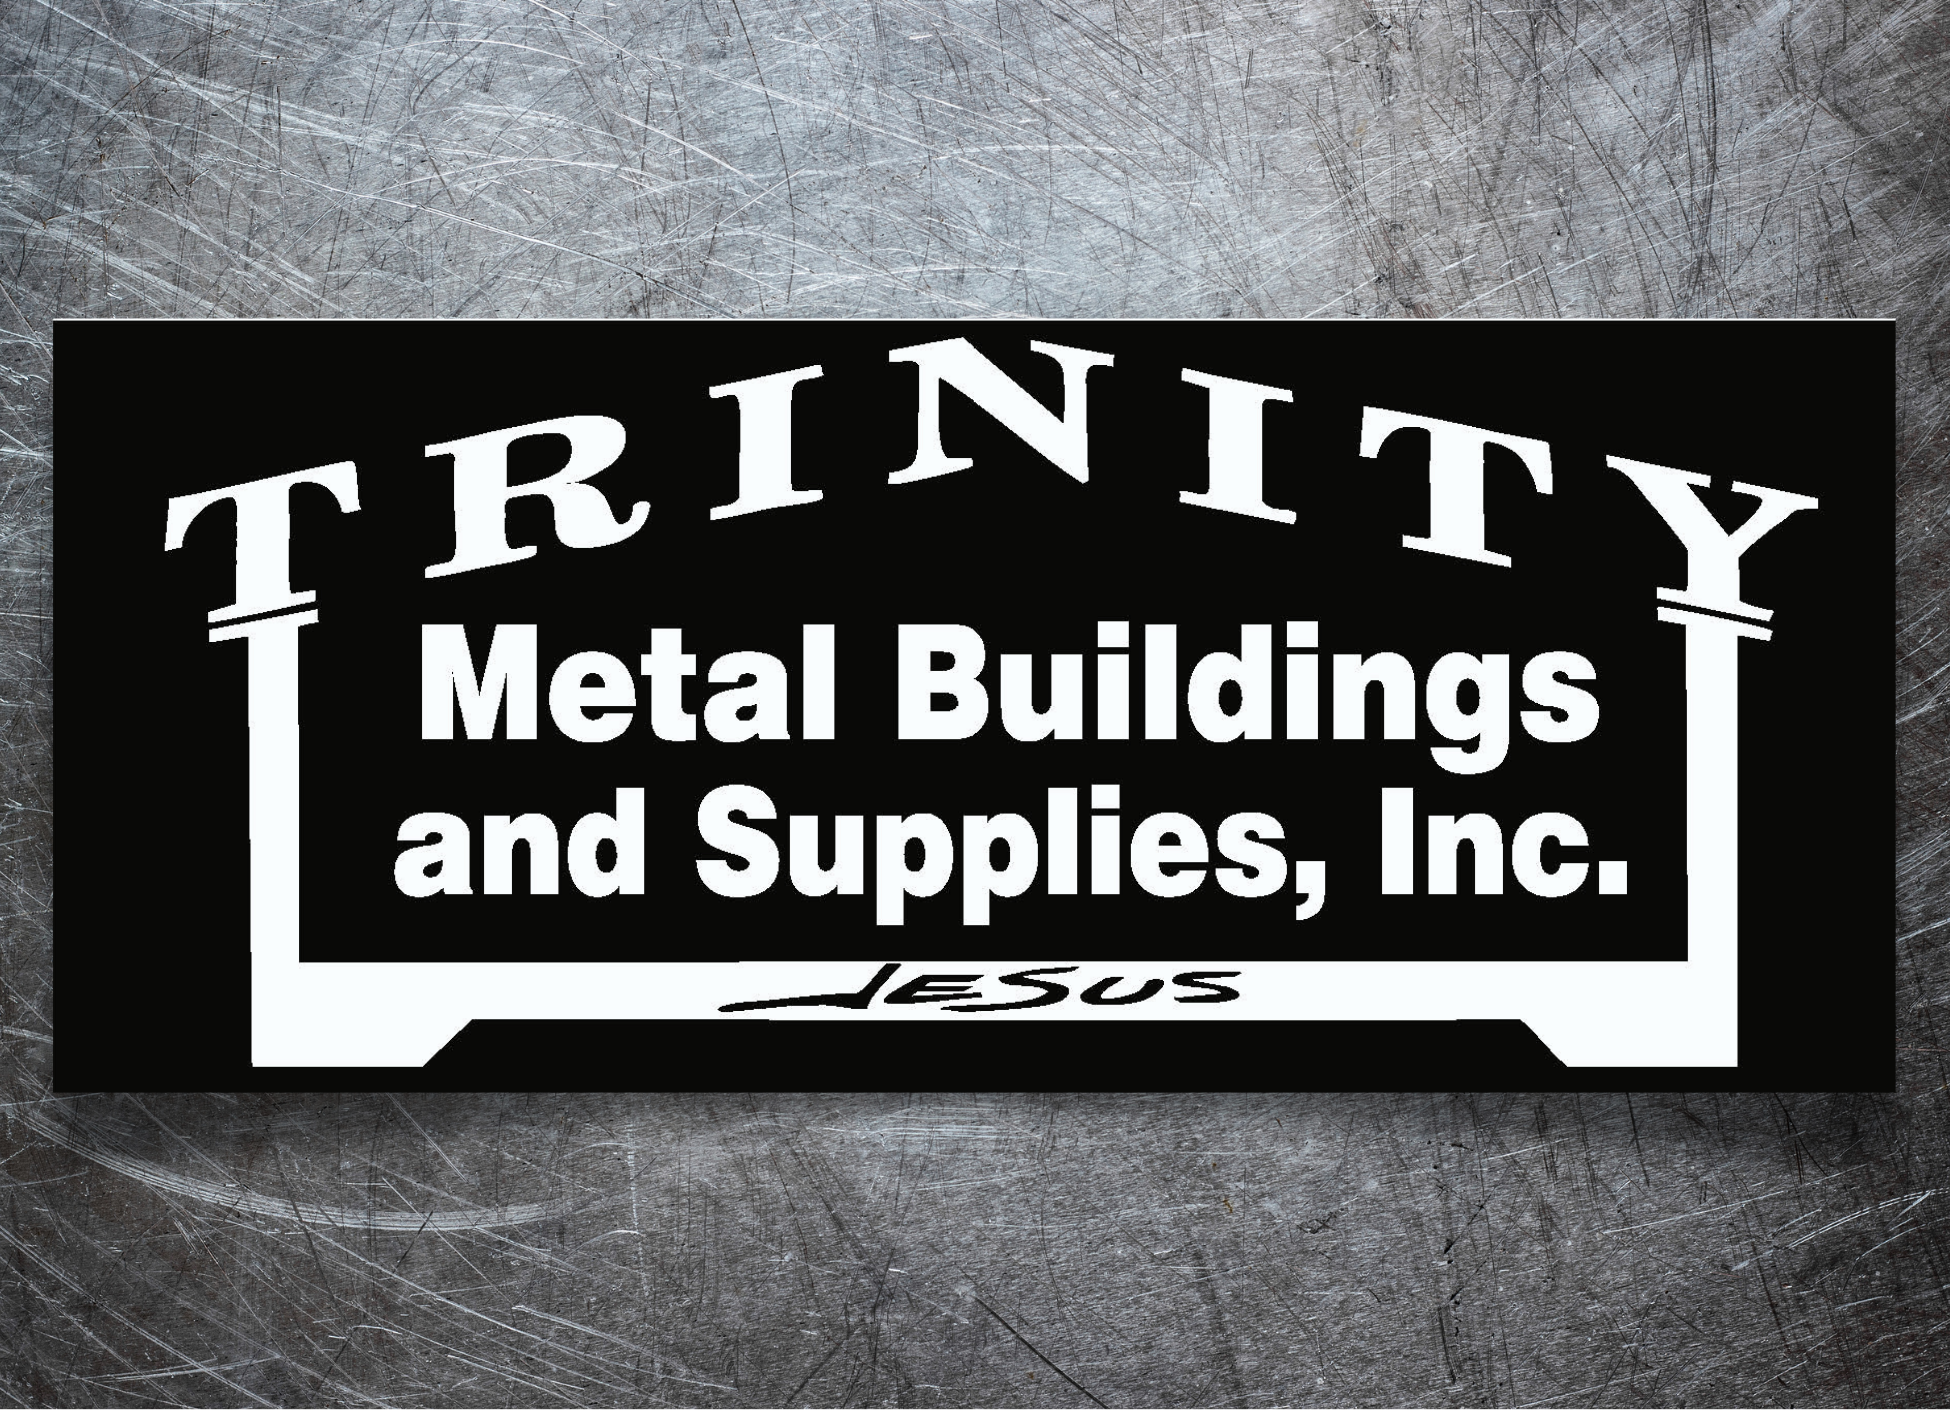 Trinity Metal Buildings & Supplies Inc.